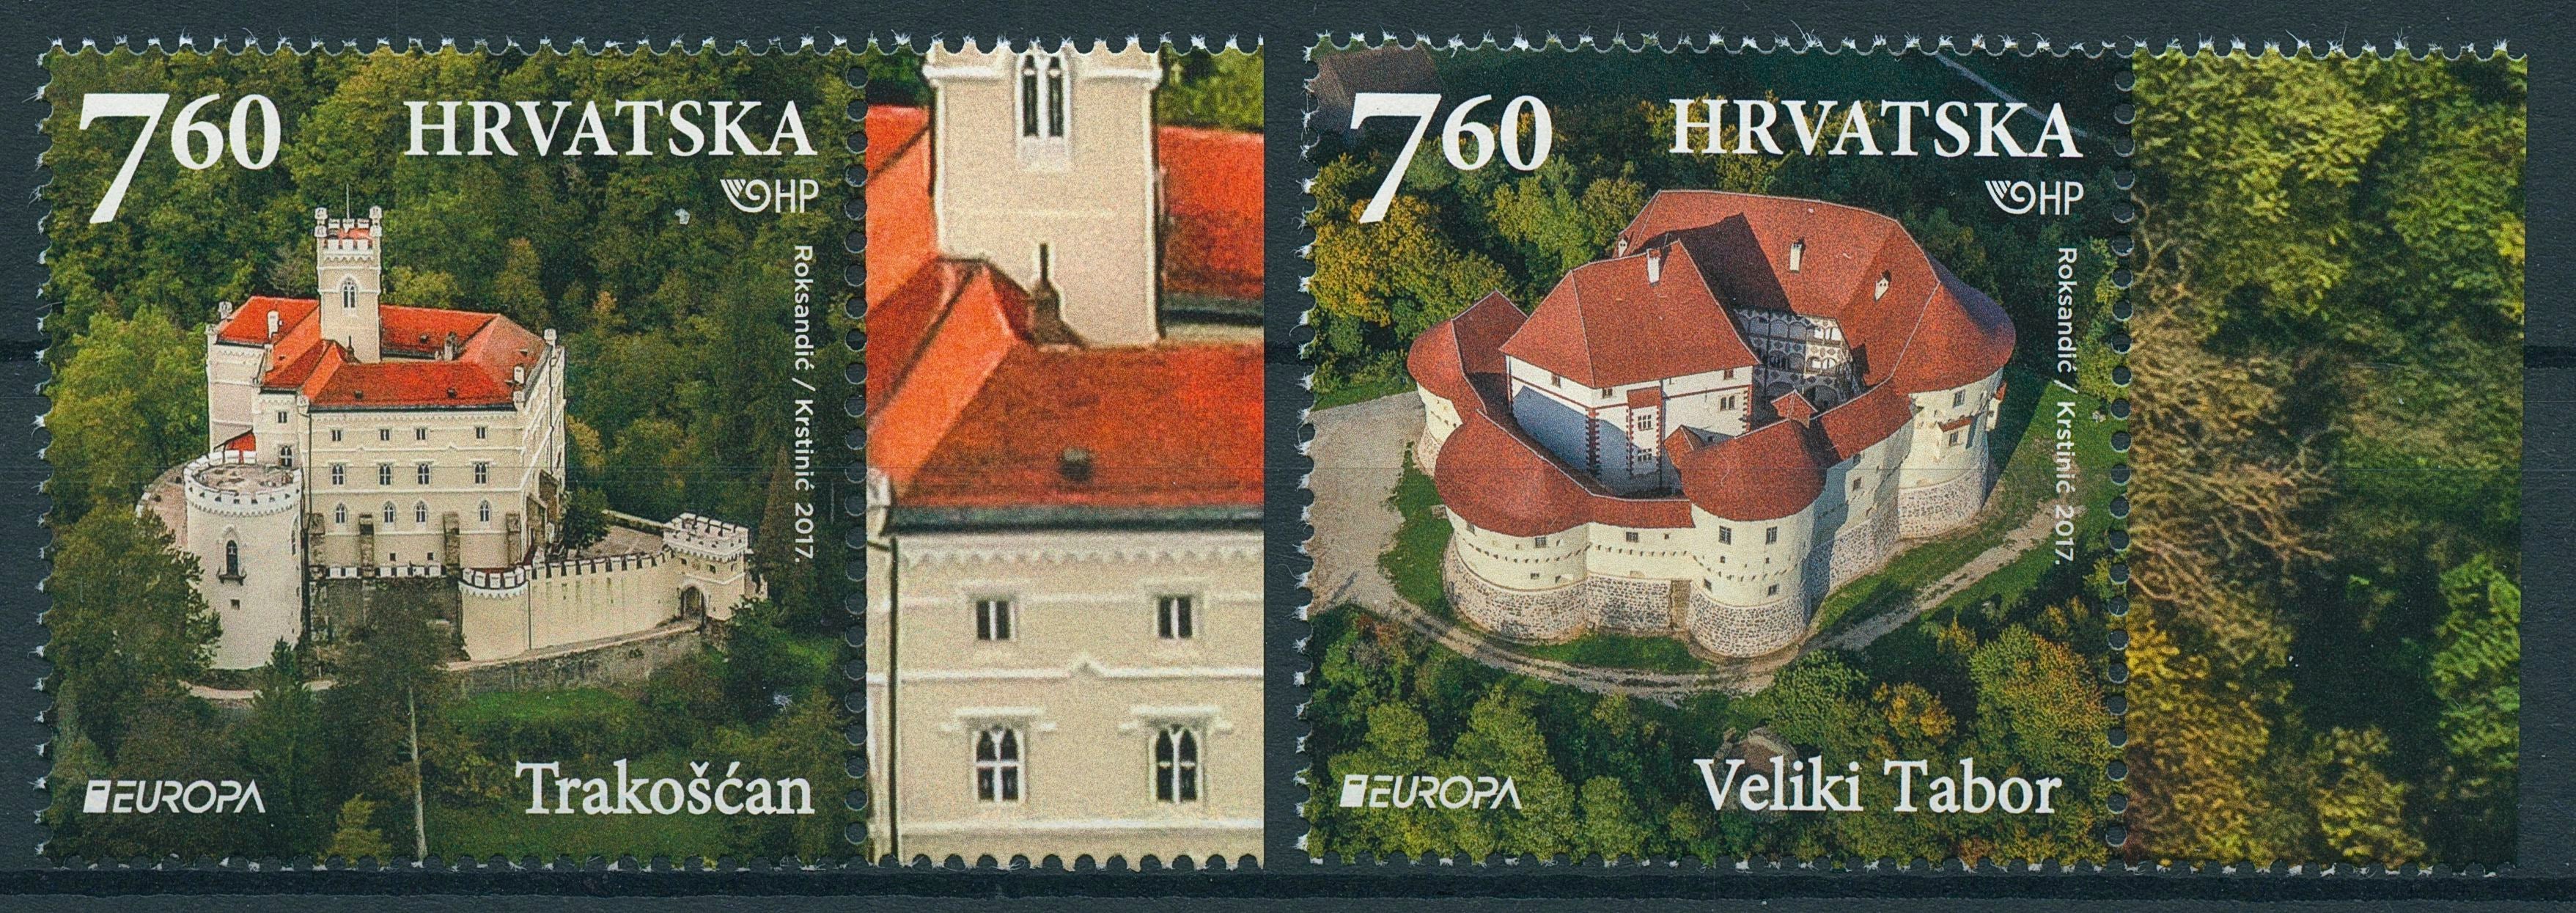 Croatia 2017 MNH Castles Europa Trakoscan Veliki Tabor Castle 2v Set Stamps